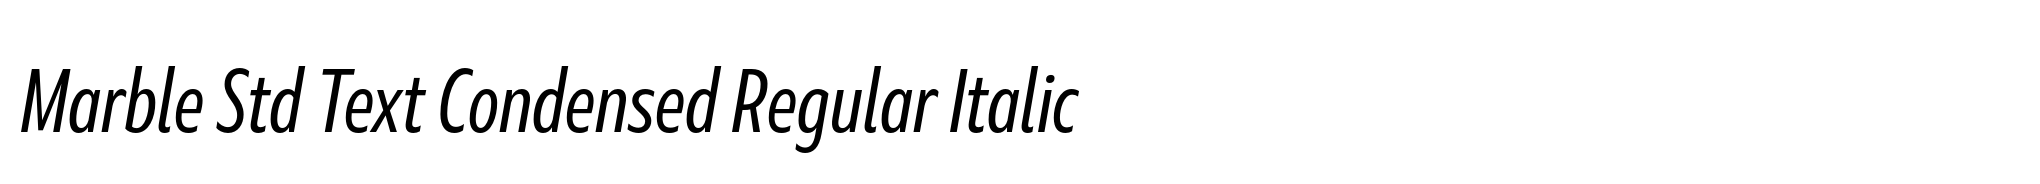 Marble Std Text Condensed Regular Italic image